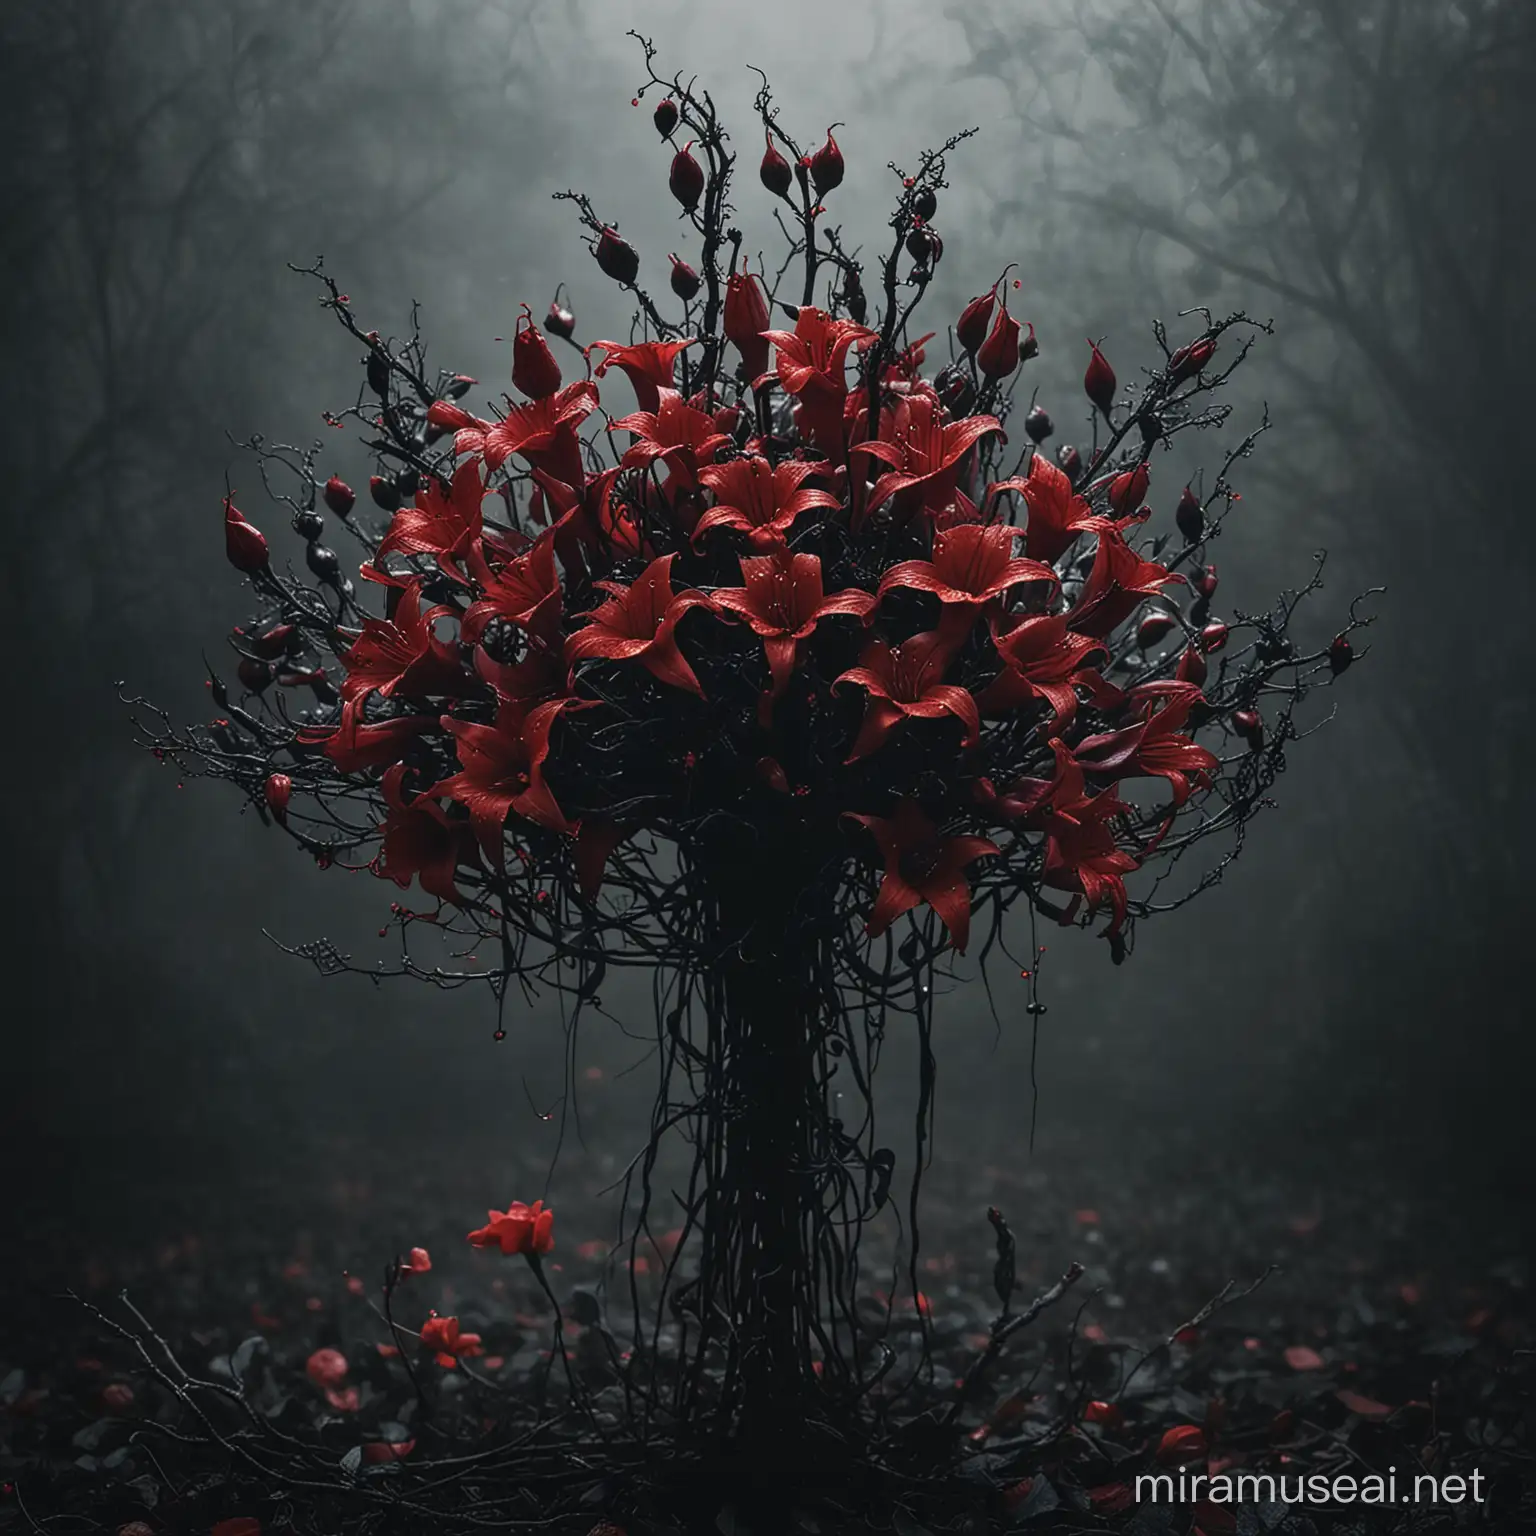 Sinisterly Beautiful Devils Flower Bouquet Haunting Crimson Blooms in Swirling Mist